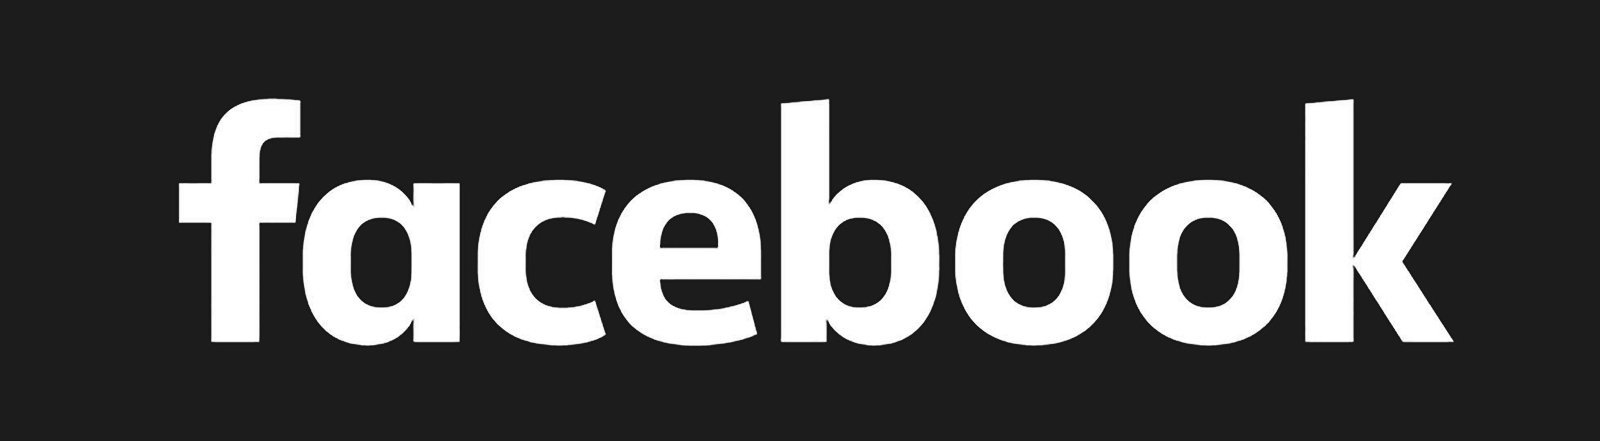 Facebook-Logo-font.jpg